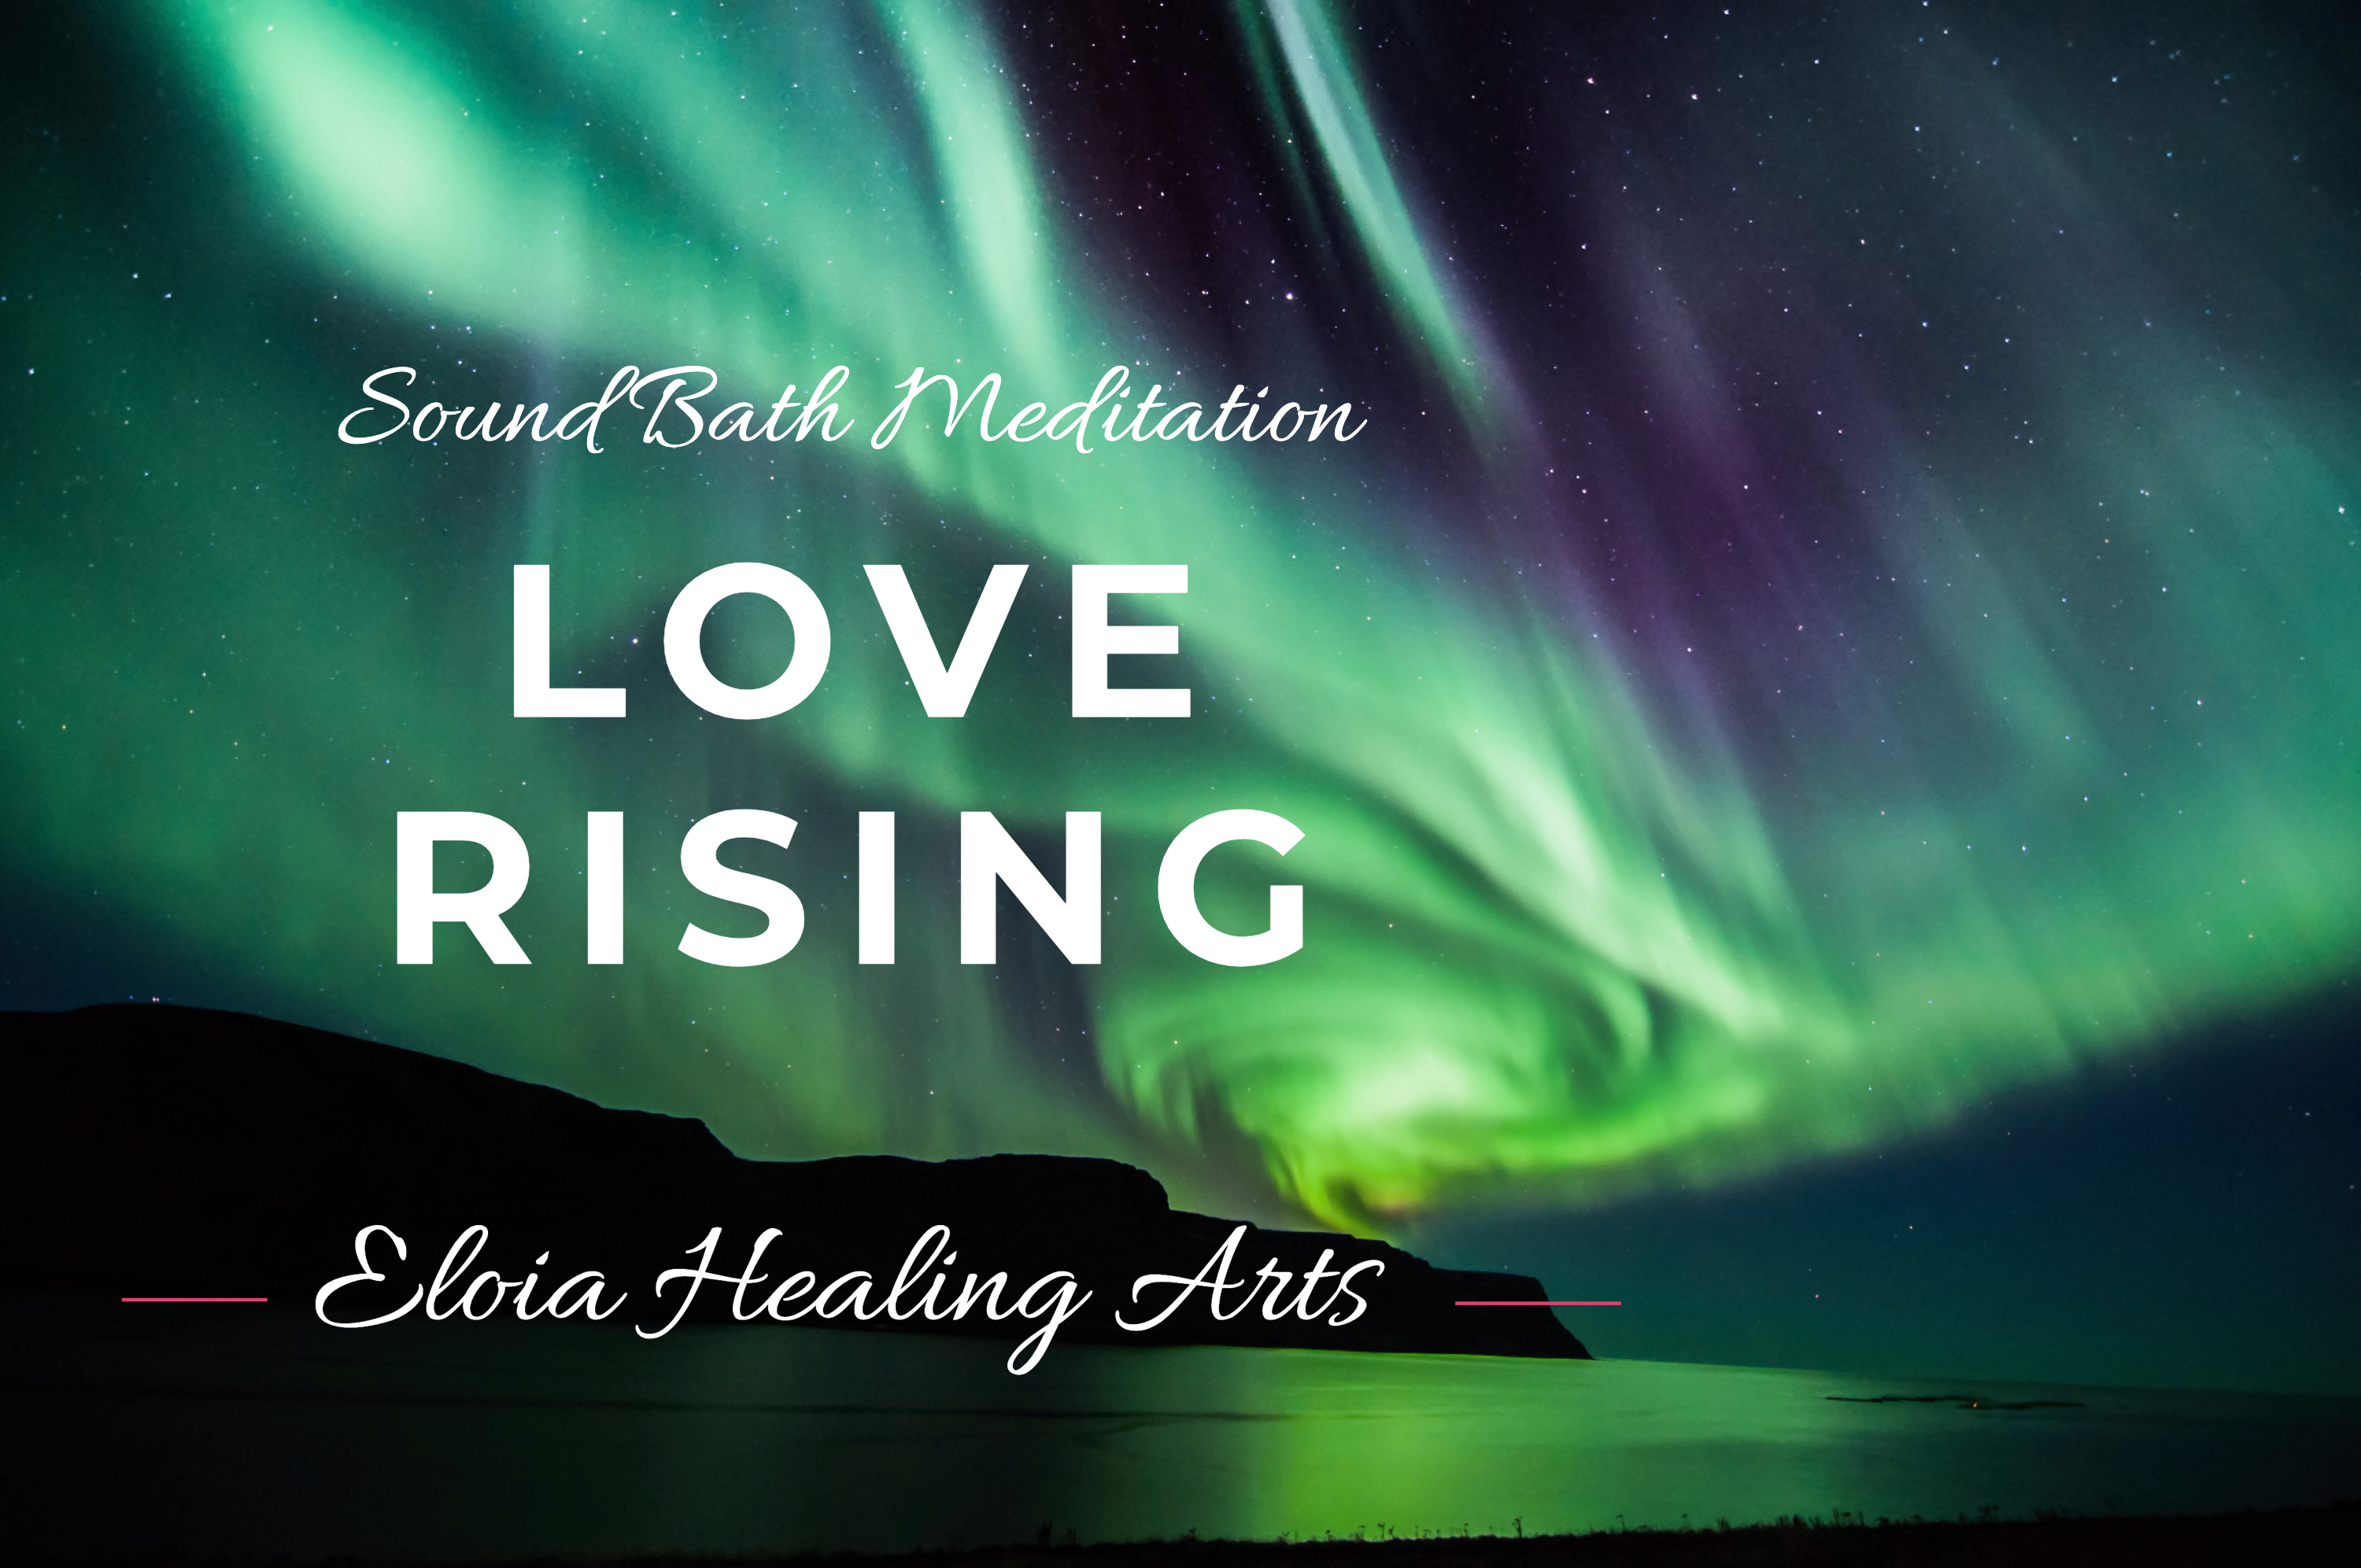 Sound Bath Meditation: LOVE RISING